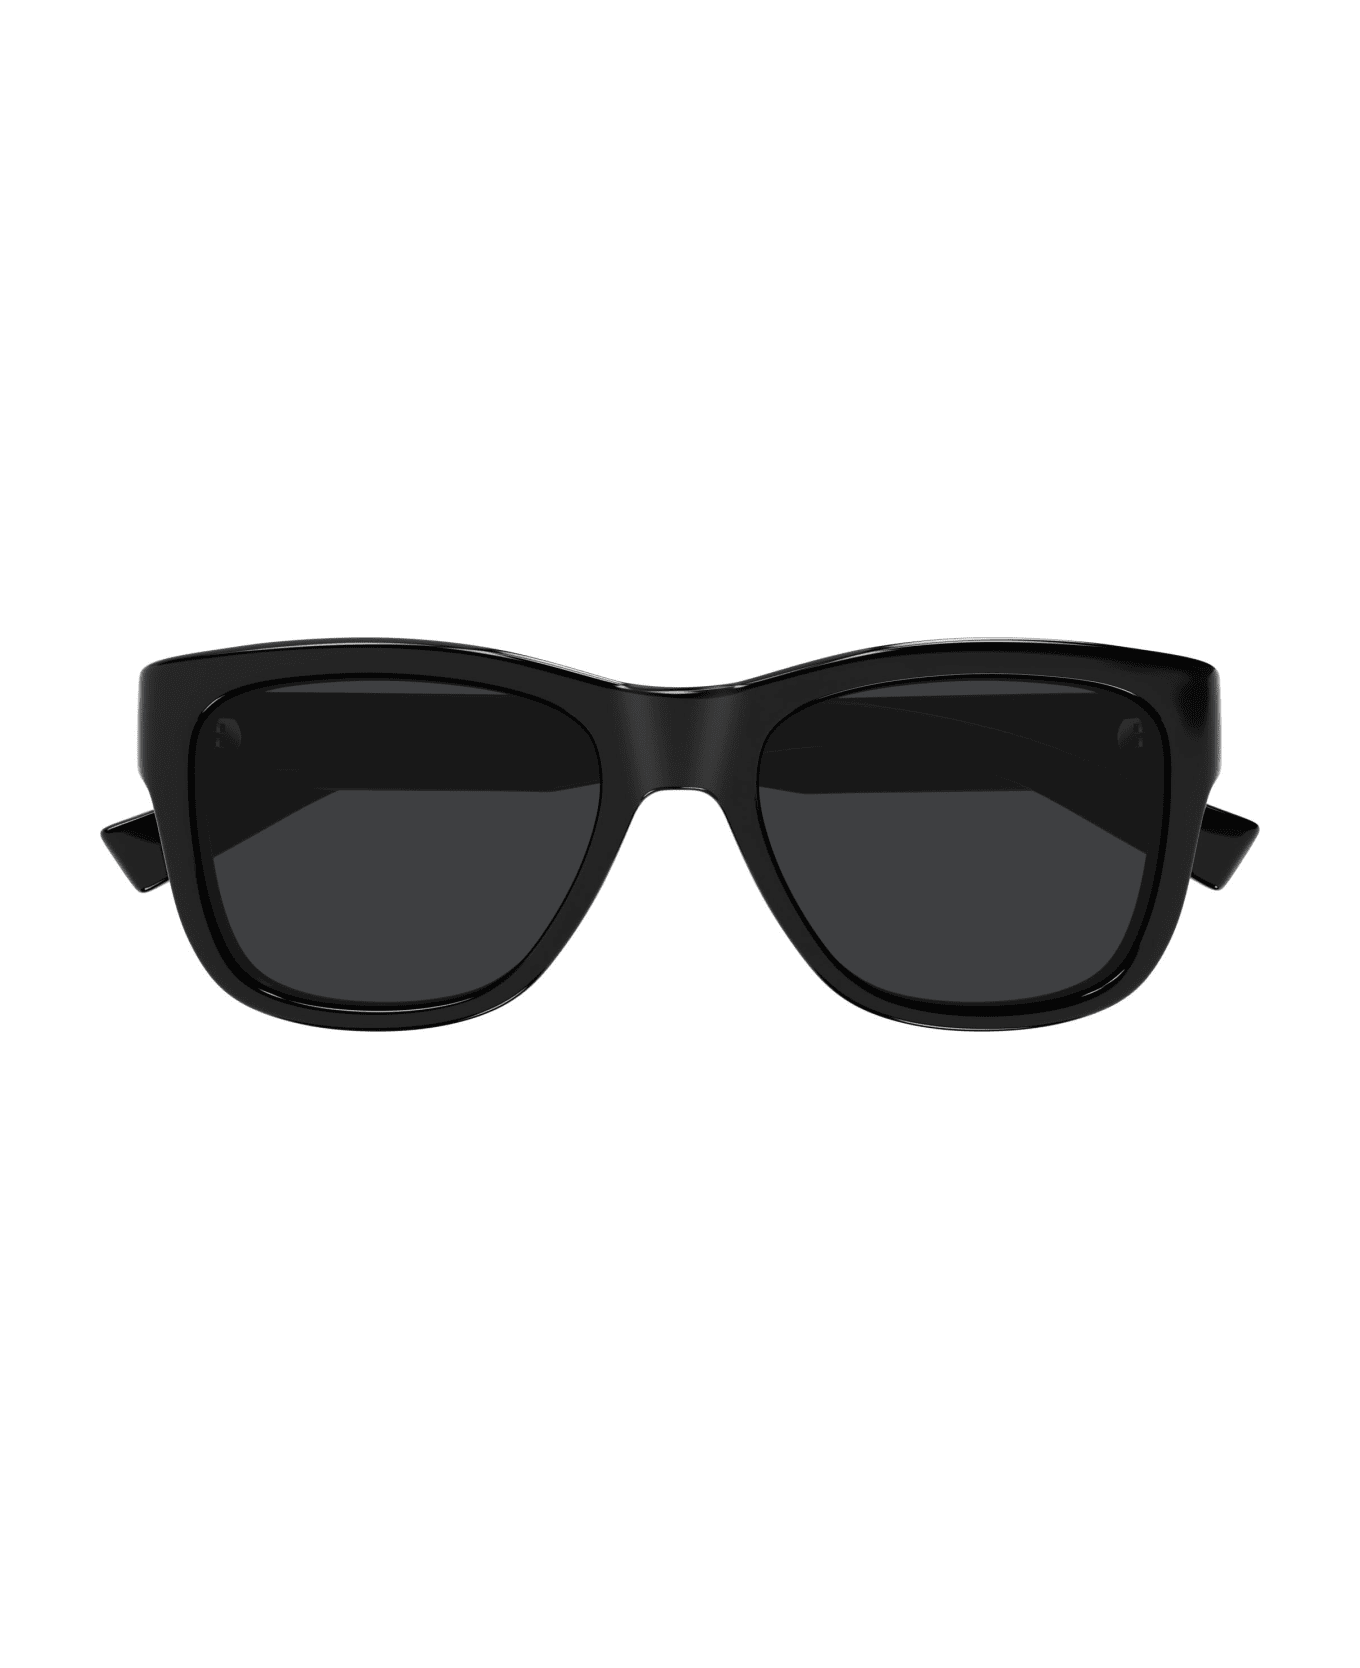 Saint Laurent Eyewear Sunglasses - Nero/Nero サングラス